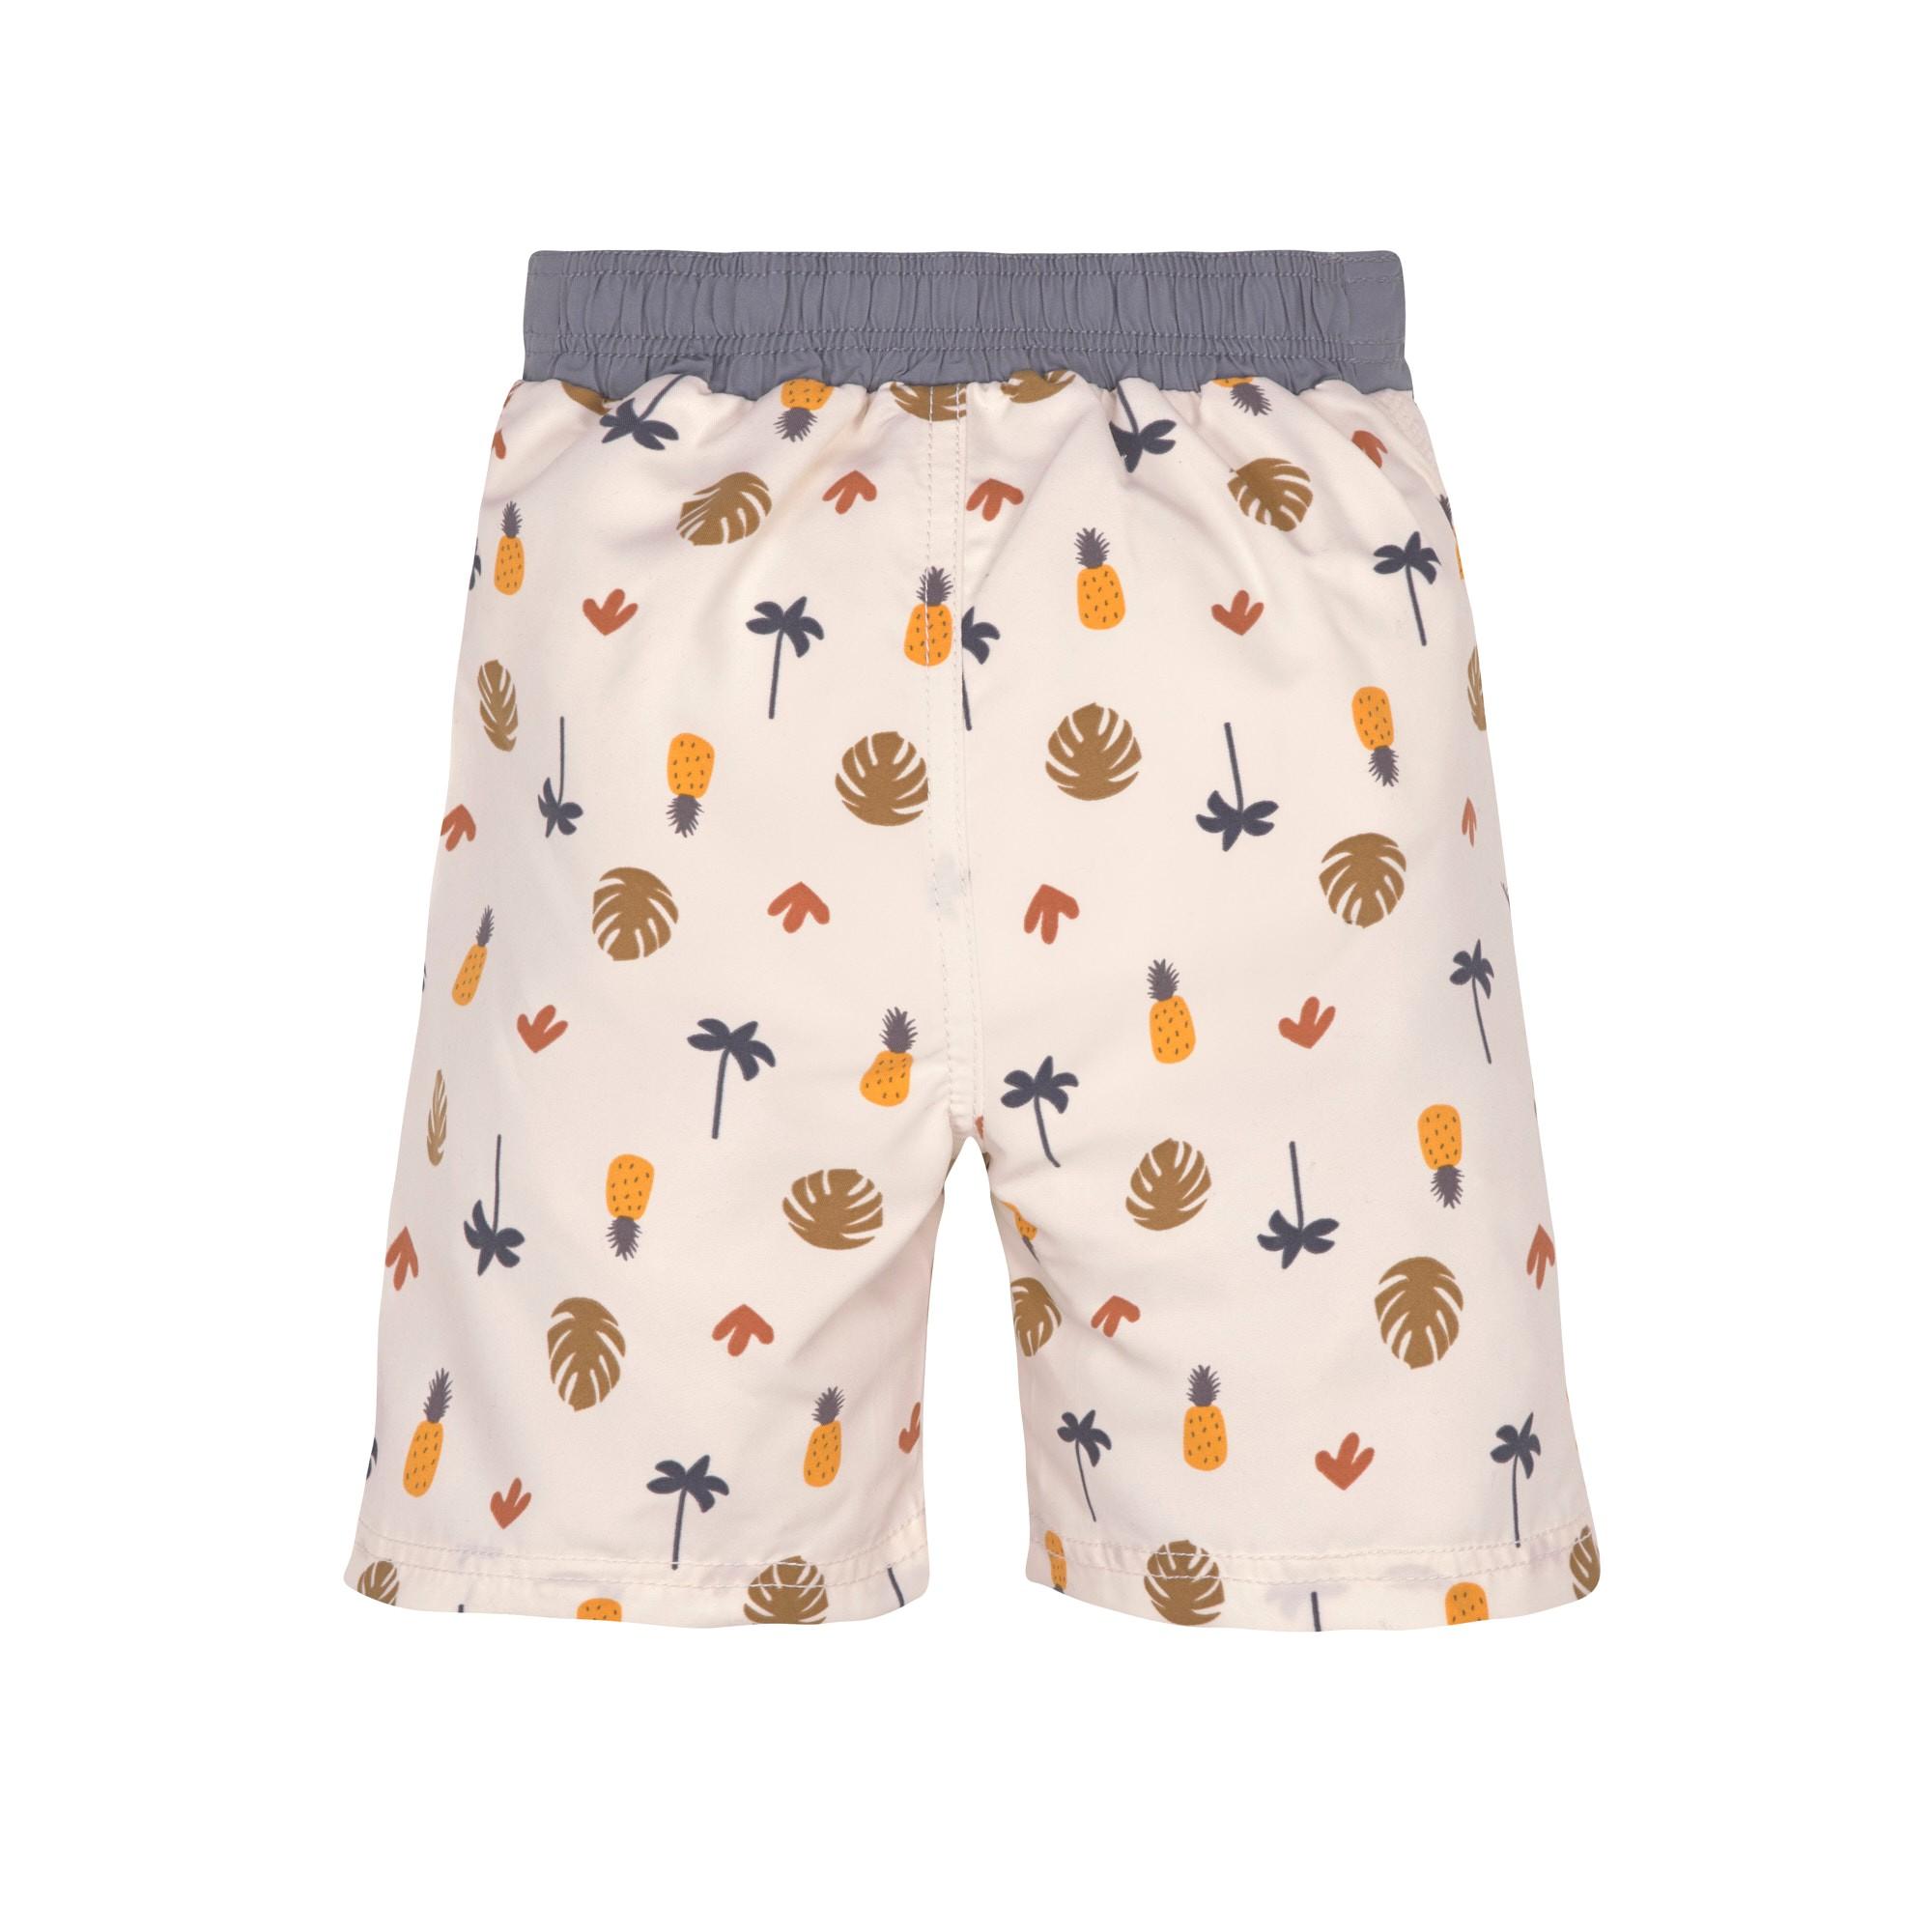 Splash & Fun - Board shorts botanical offwhite